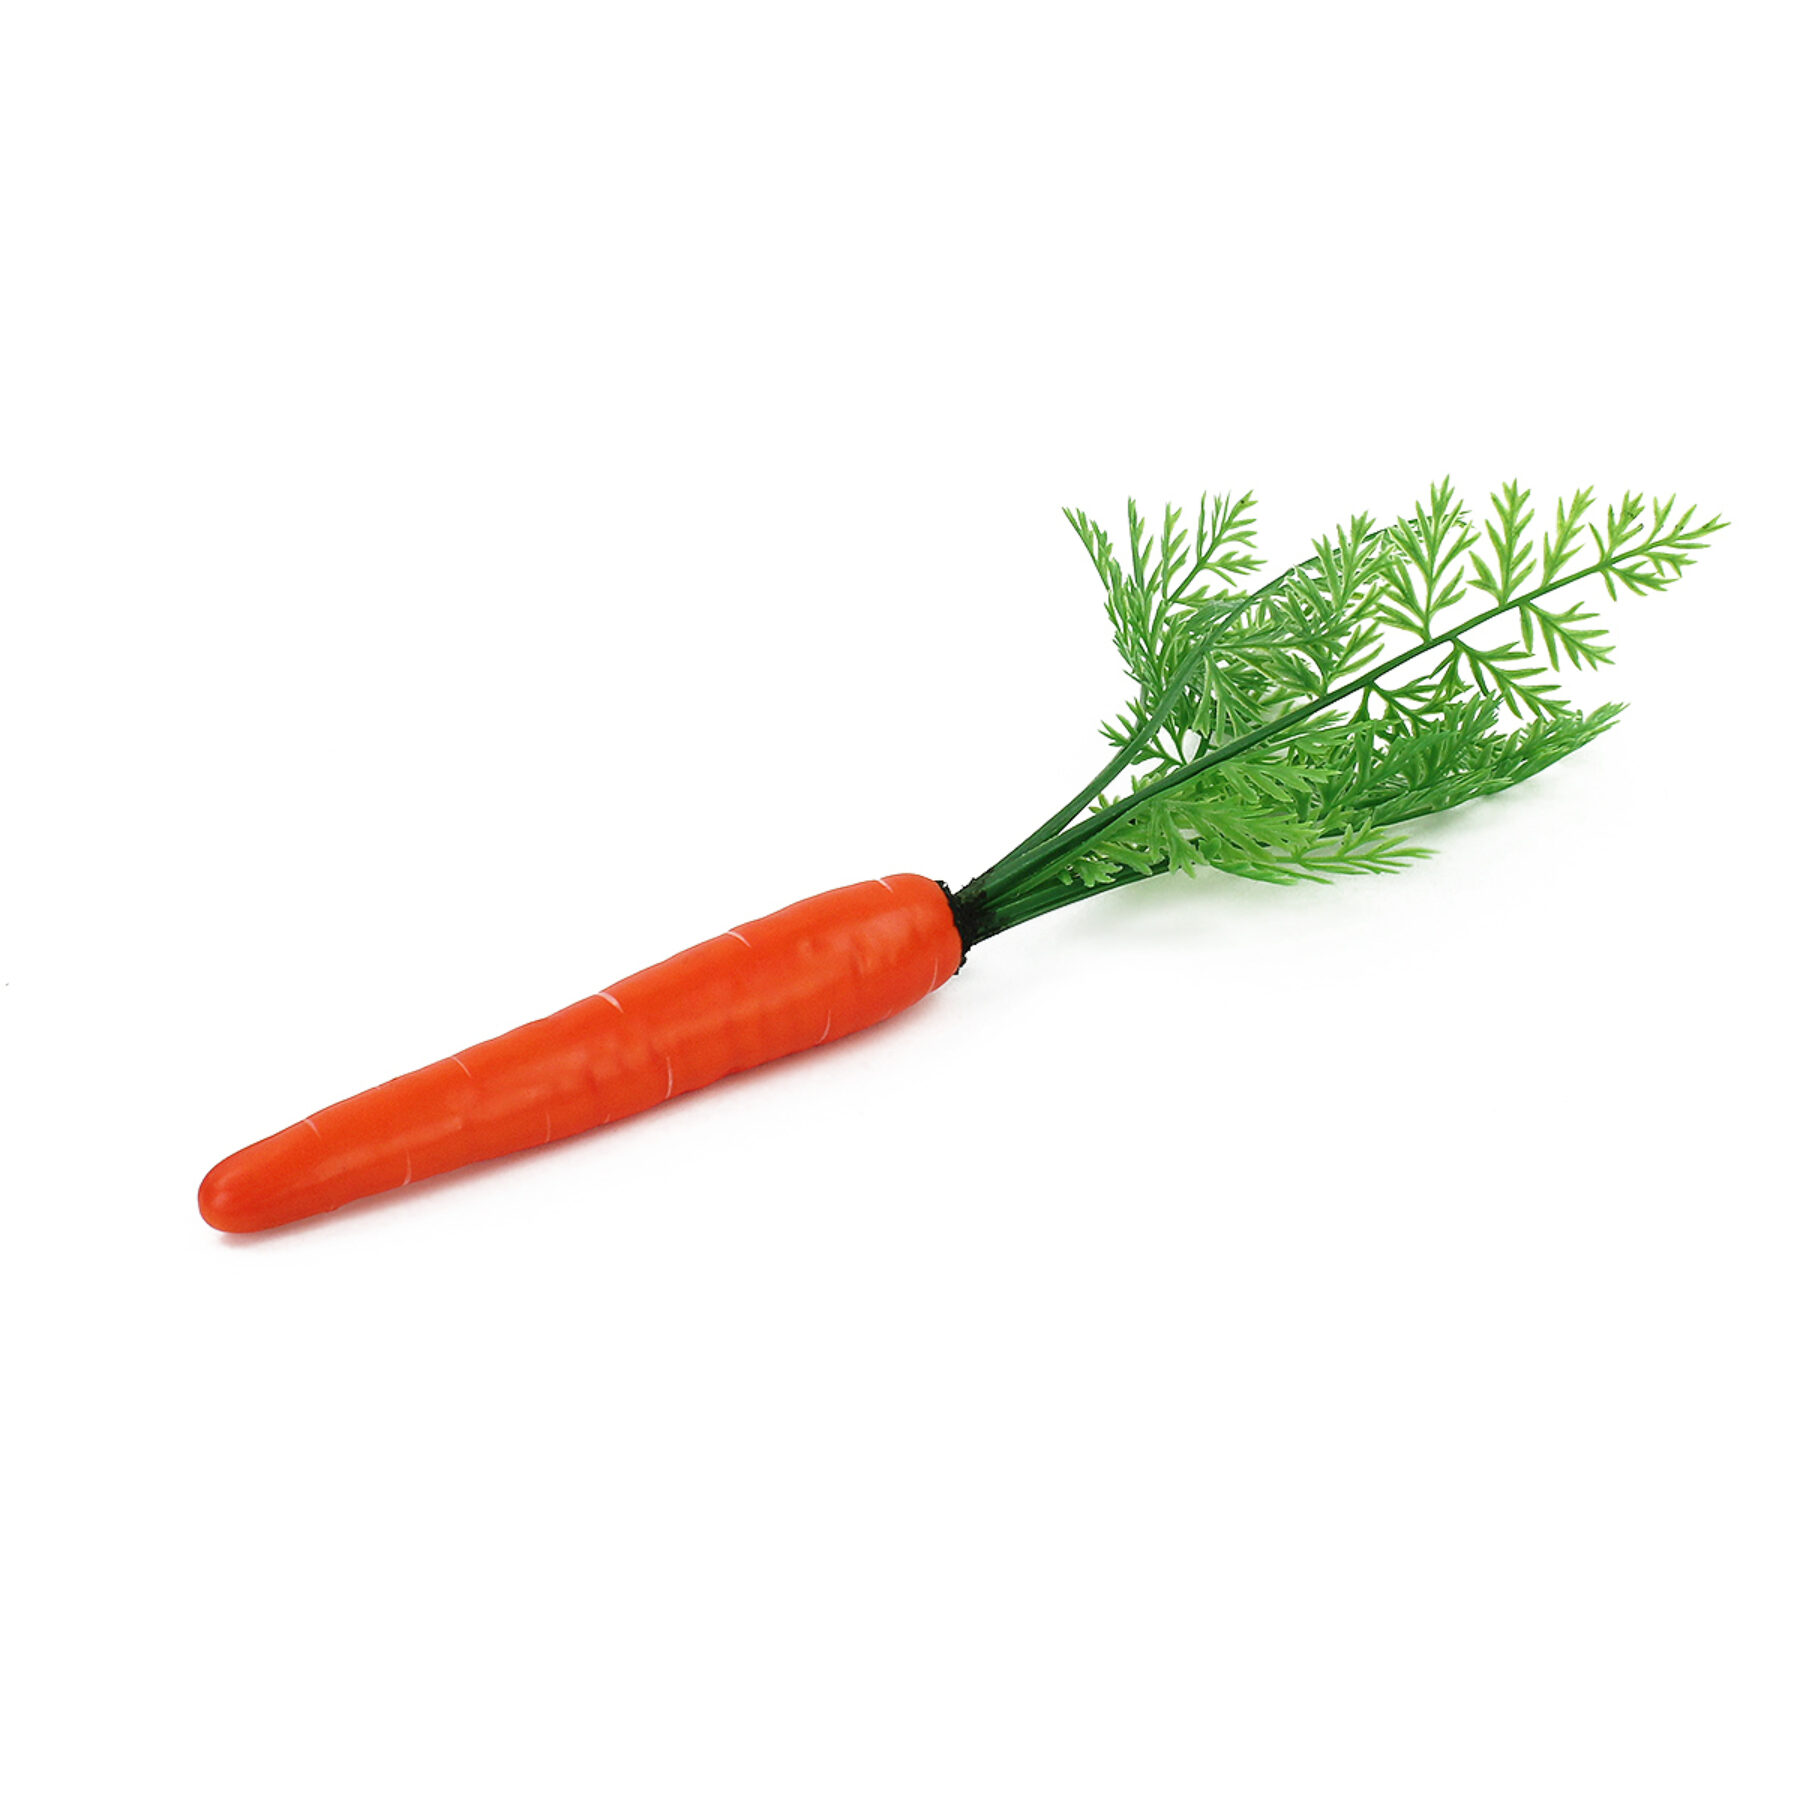 Artificial Food - Carrot